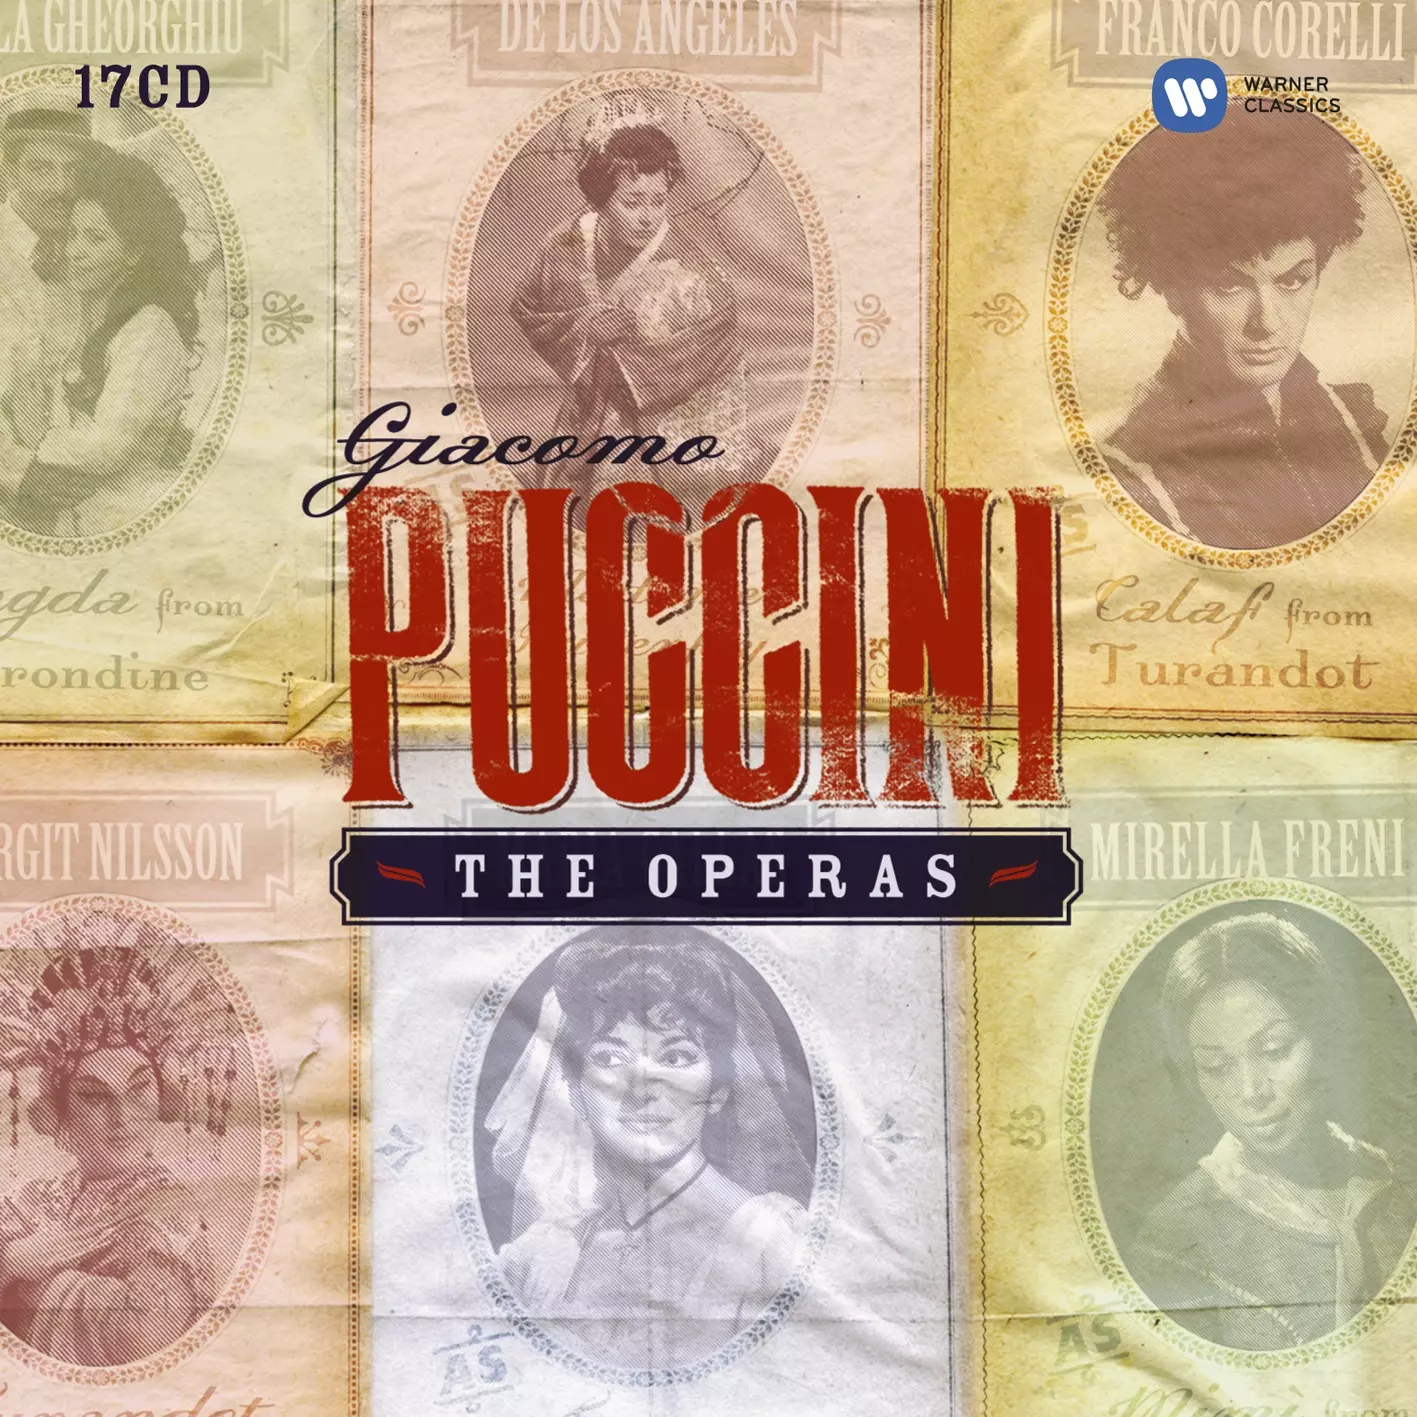 Puccini: The Operas